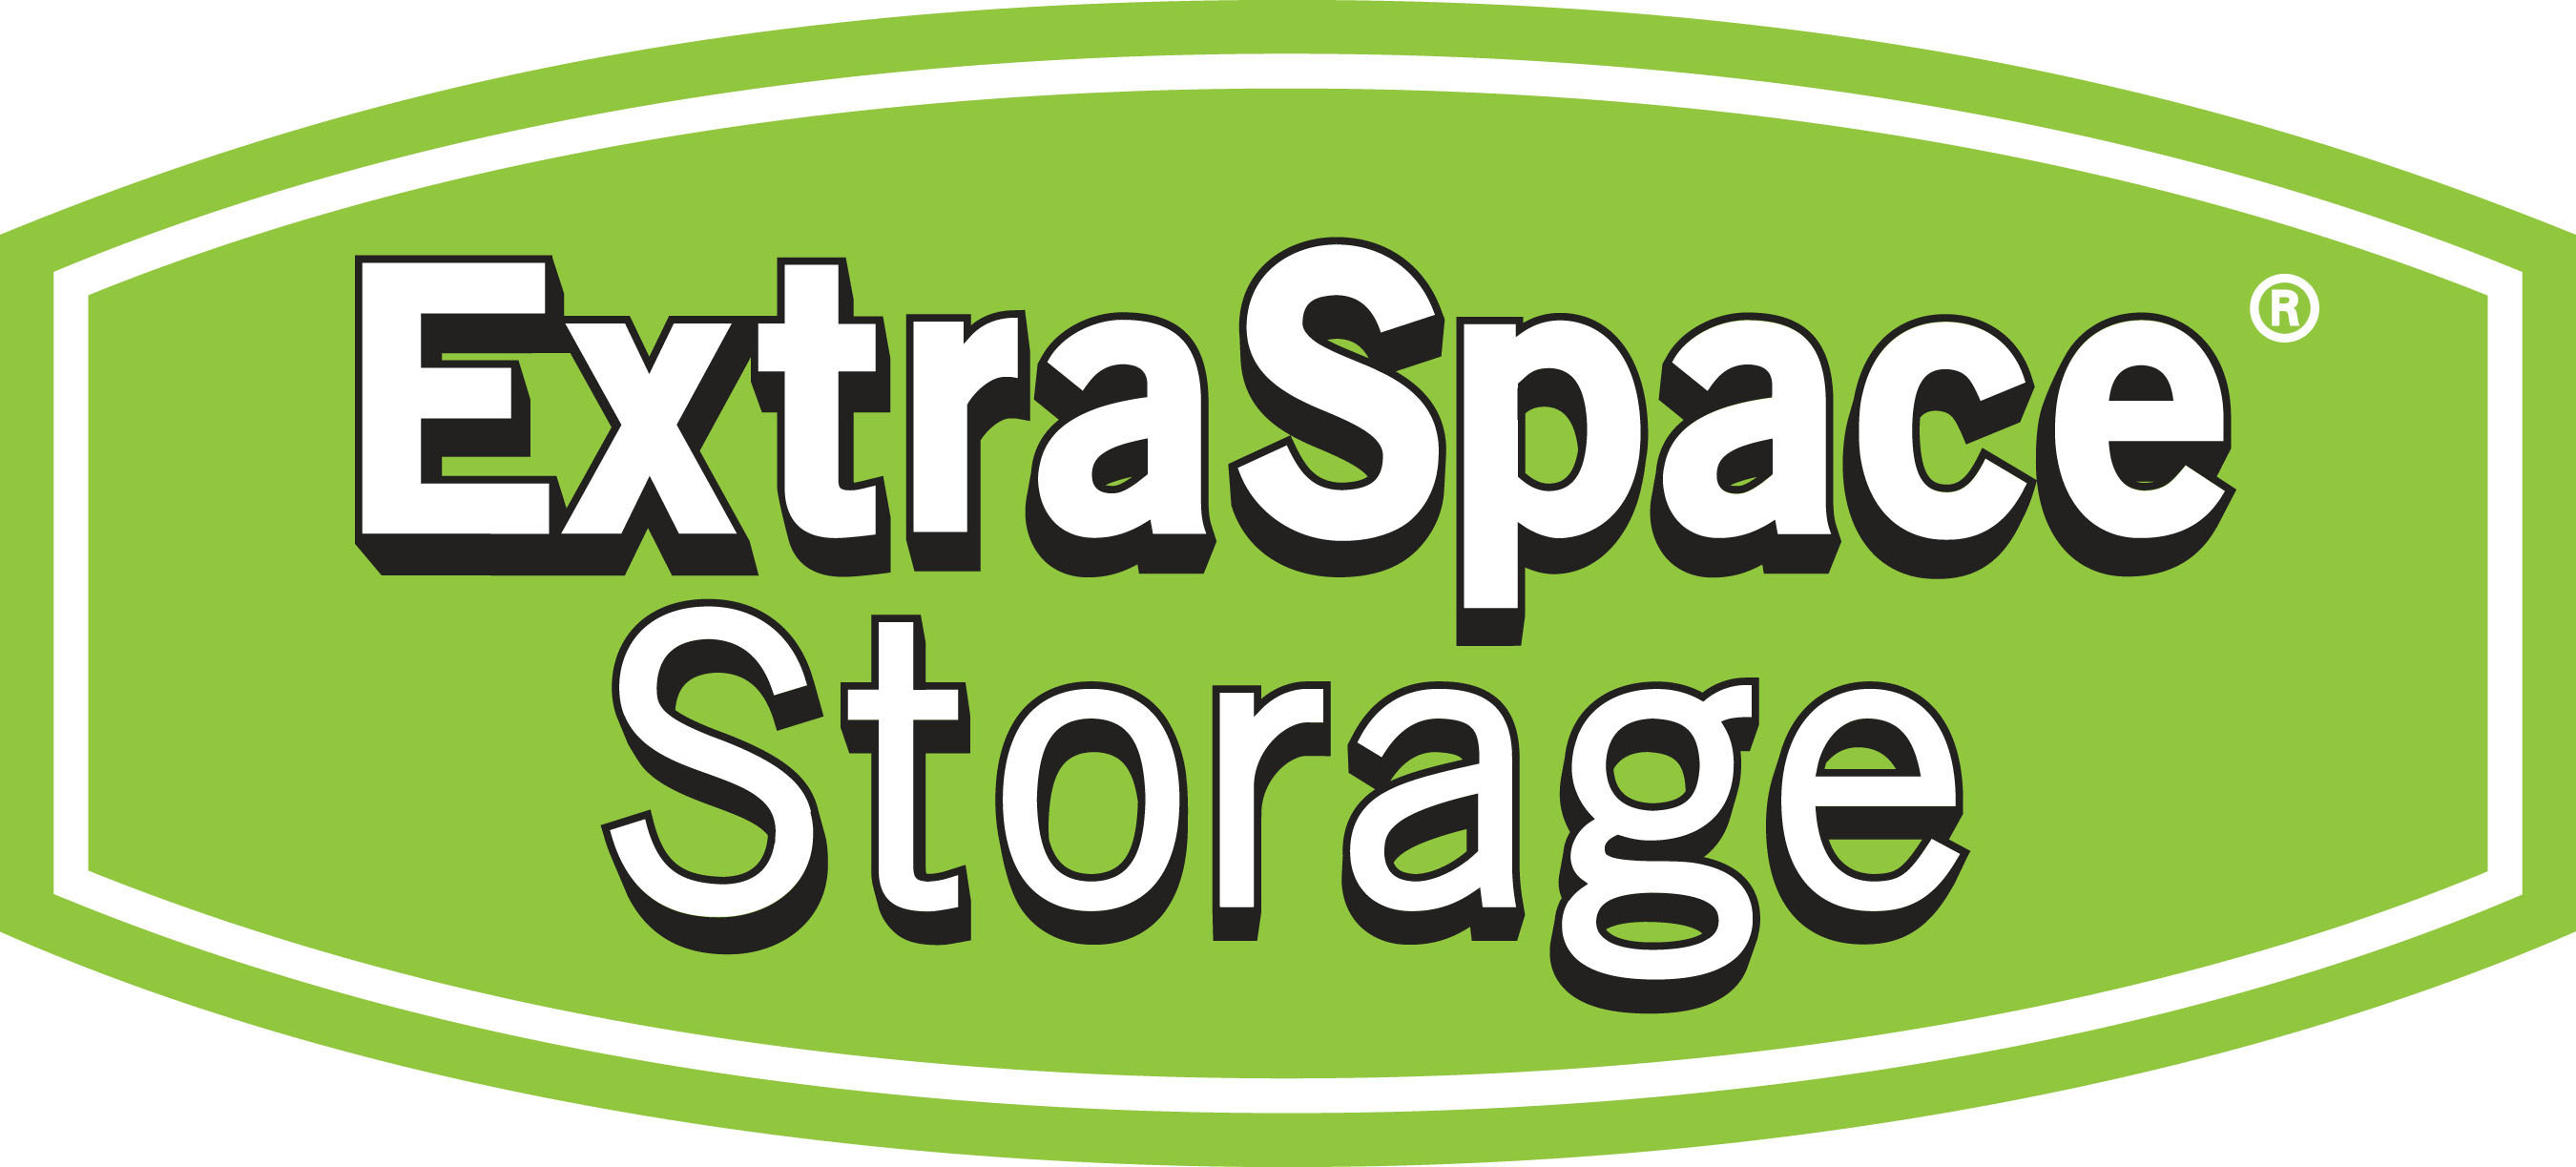 Extra Space Storage. You deserve some extra space! (PRNewsFoto/Extra Space Storage Inc.)